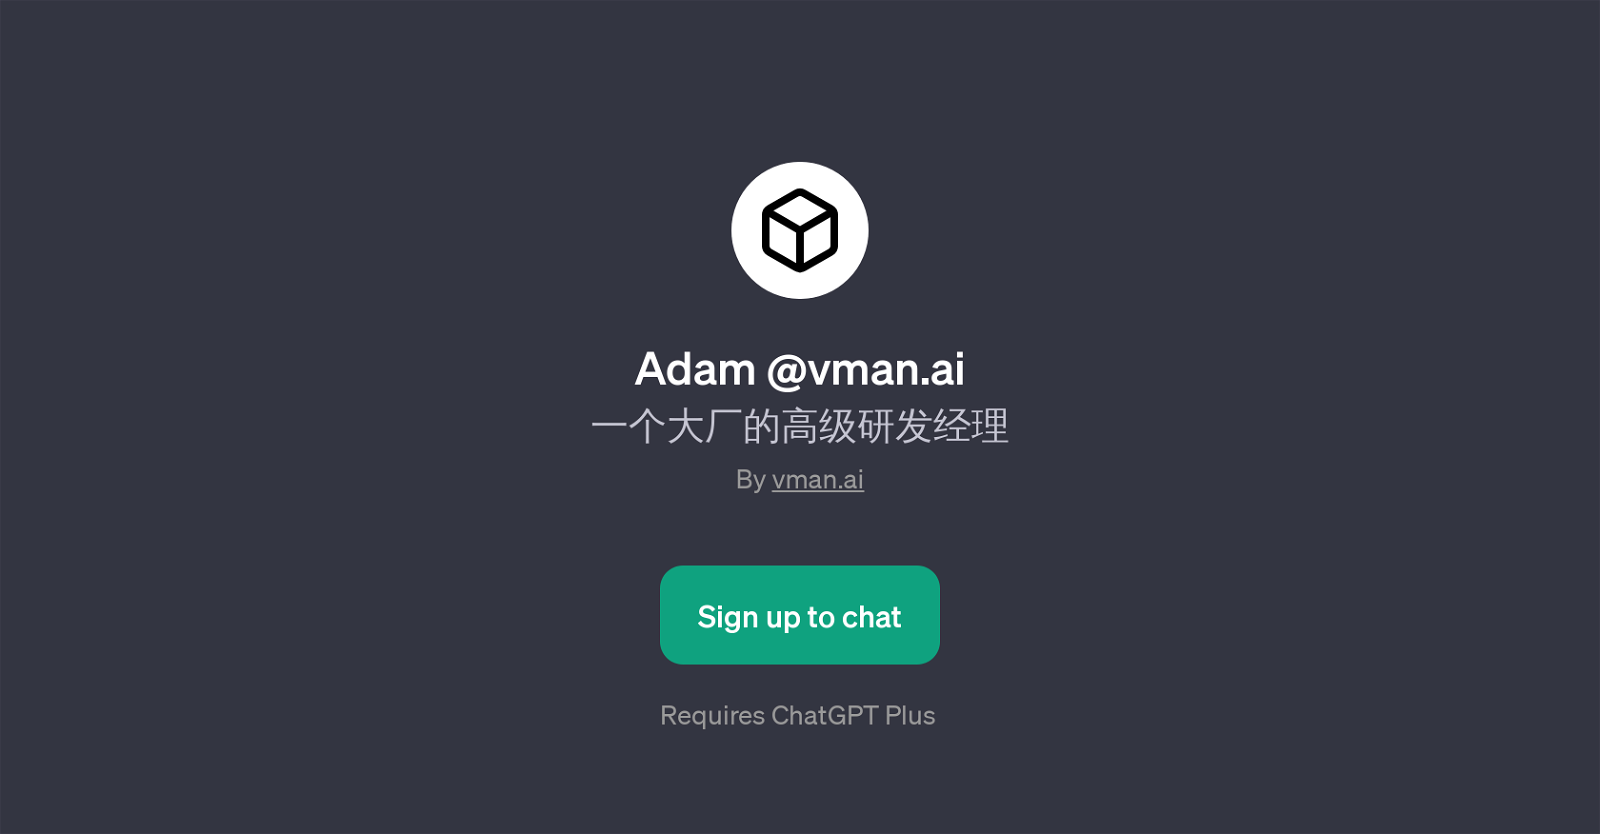 Adam @vman.ai website